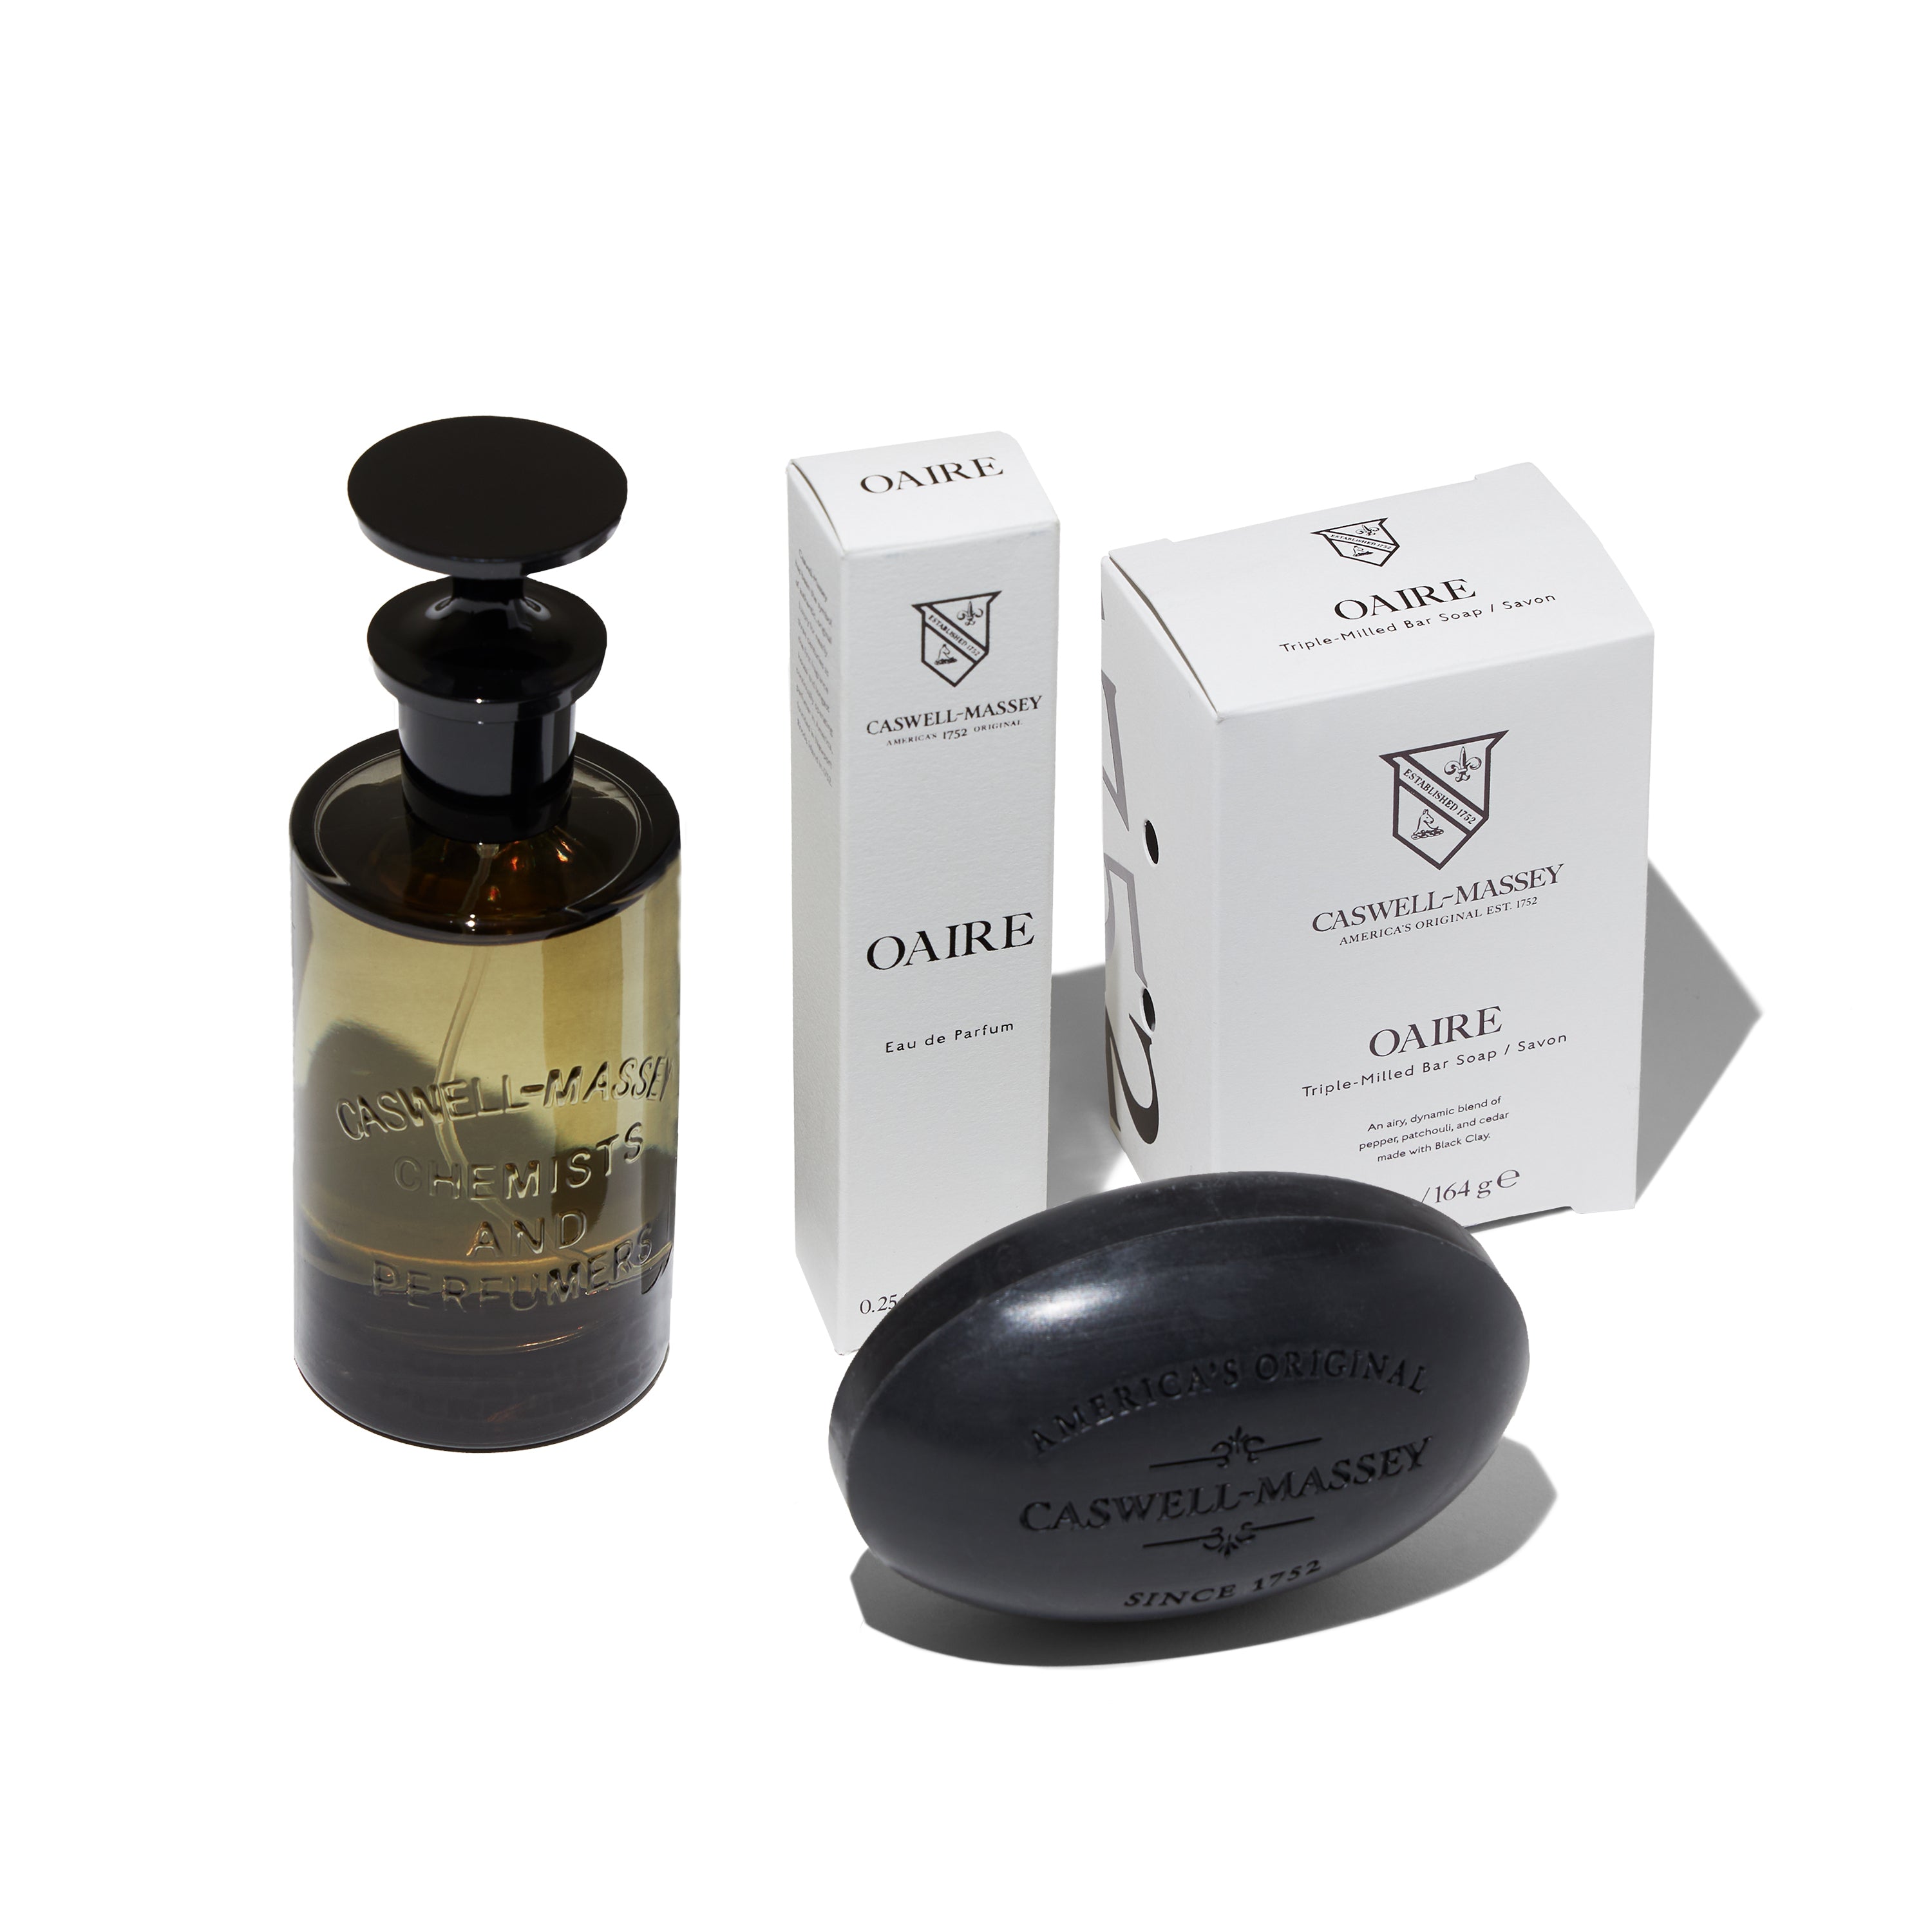 Caswell-Massey Oaire Eau de Parfum showing full-size 100ml, travel-size 100ml, and Oaire Bar Soap